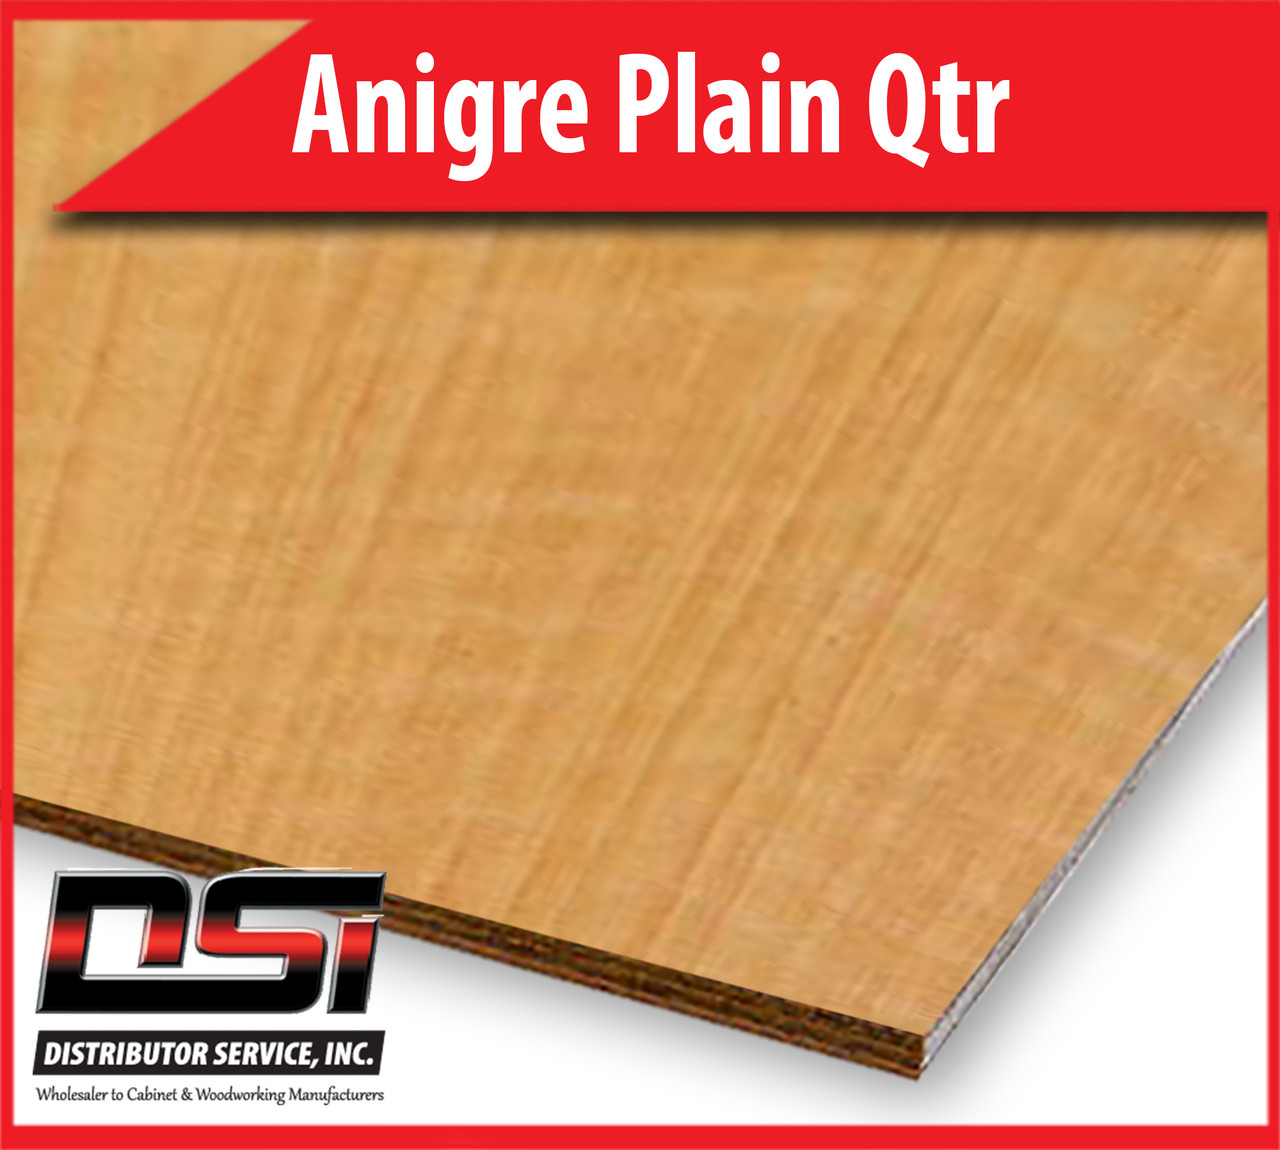 Anigre Plain Qtr Plywood Eurocore A-A 3/4" x 4x8